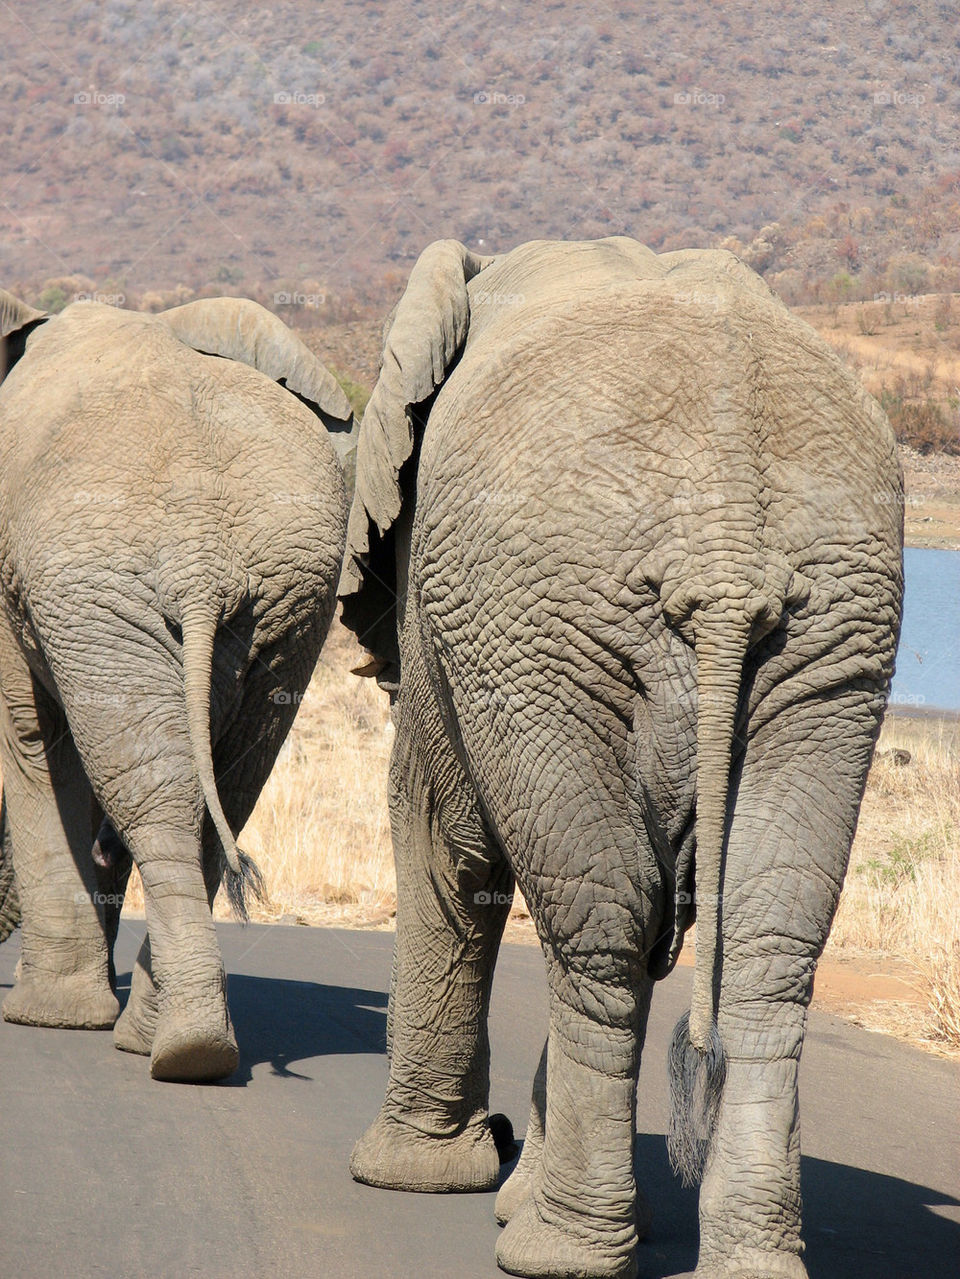 elephant safari by gatordukie